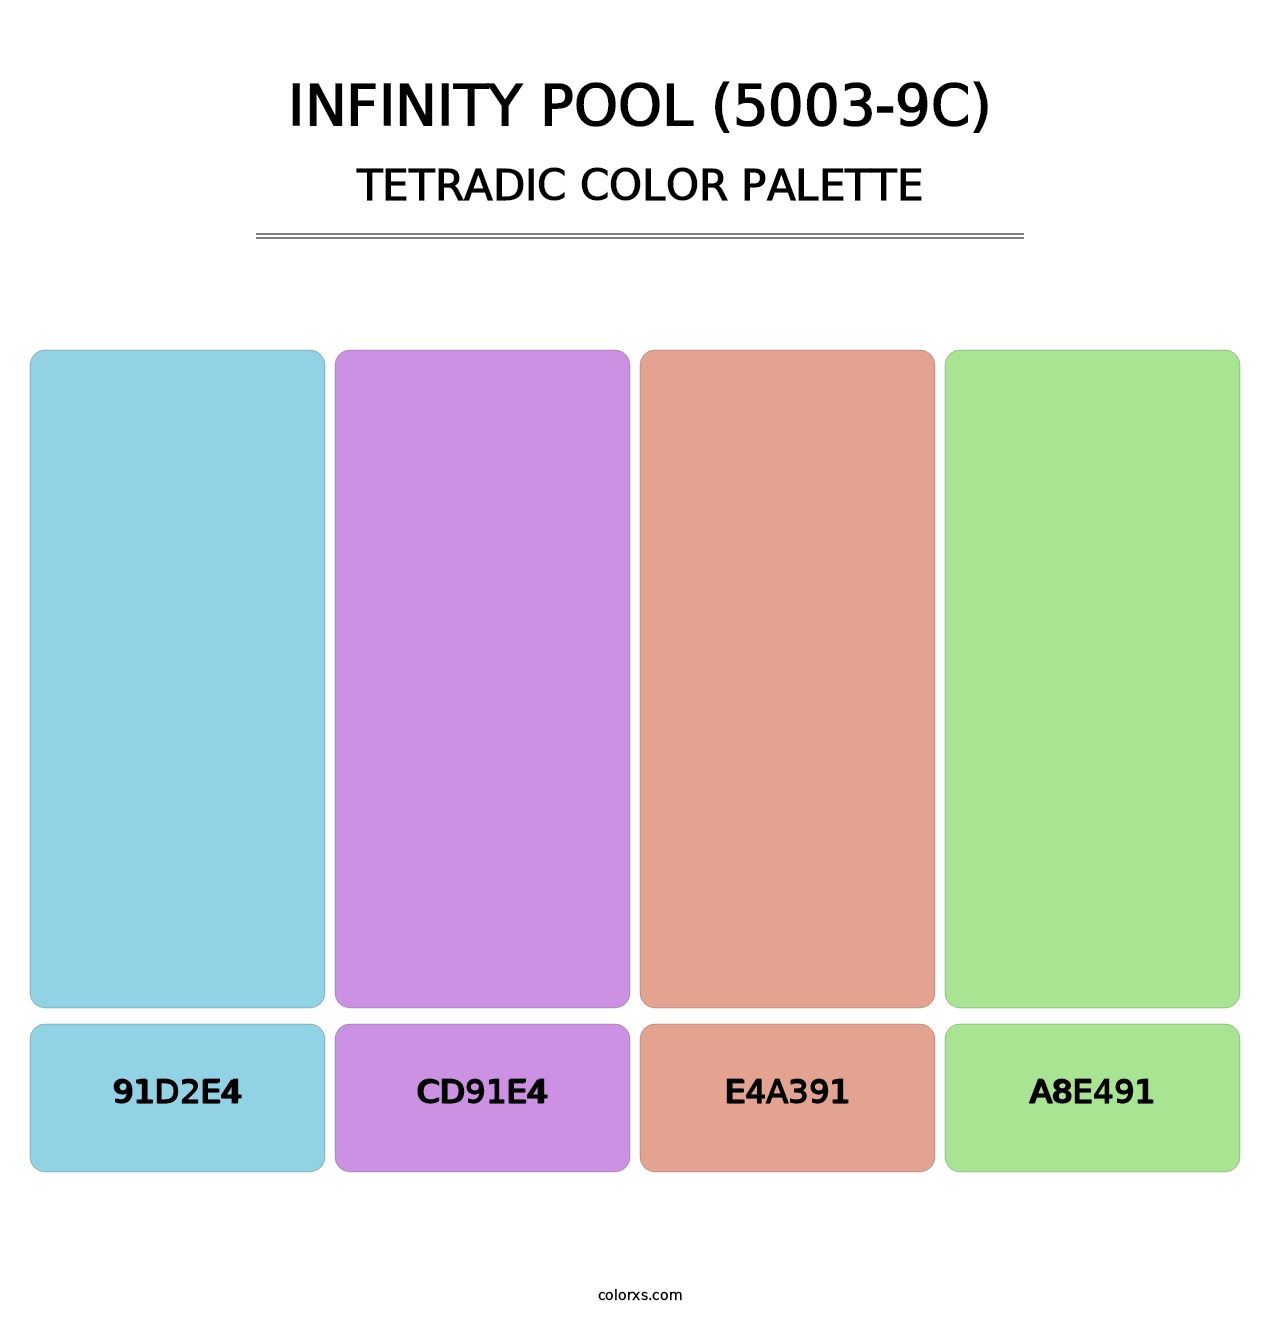 Infinity Pool (5003-9C) - Tetradic Color Palette